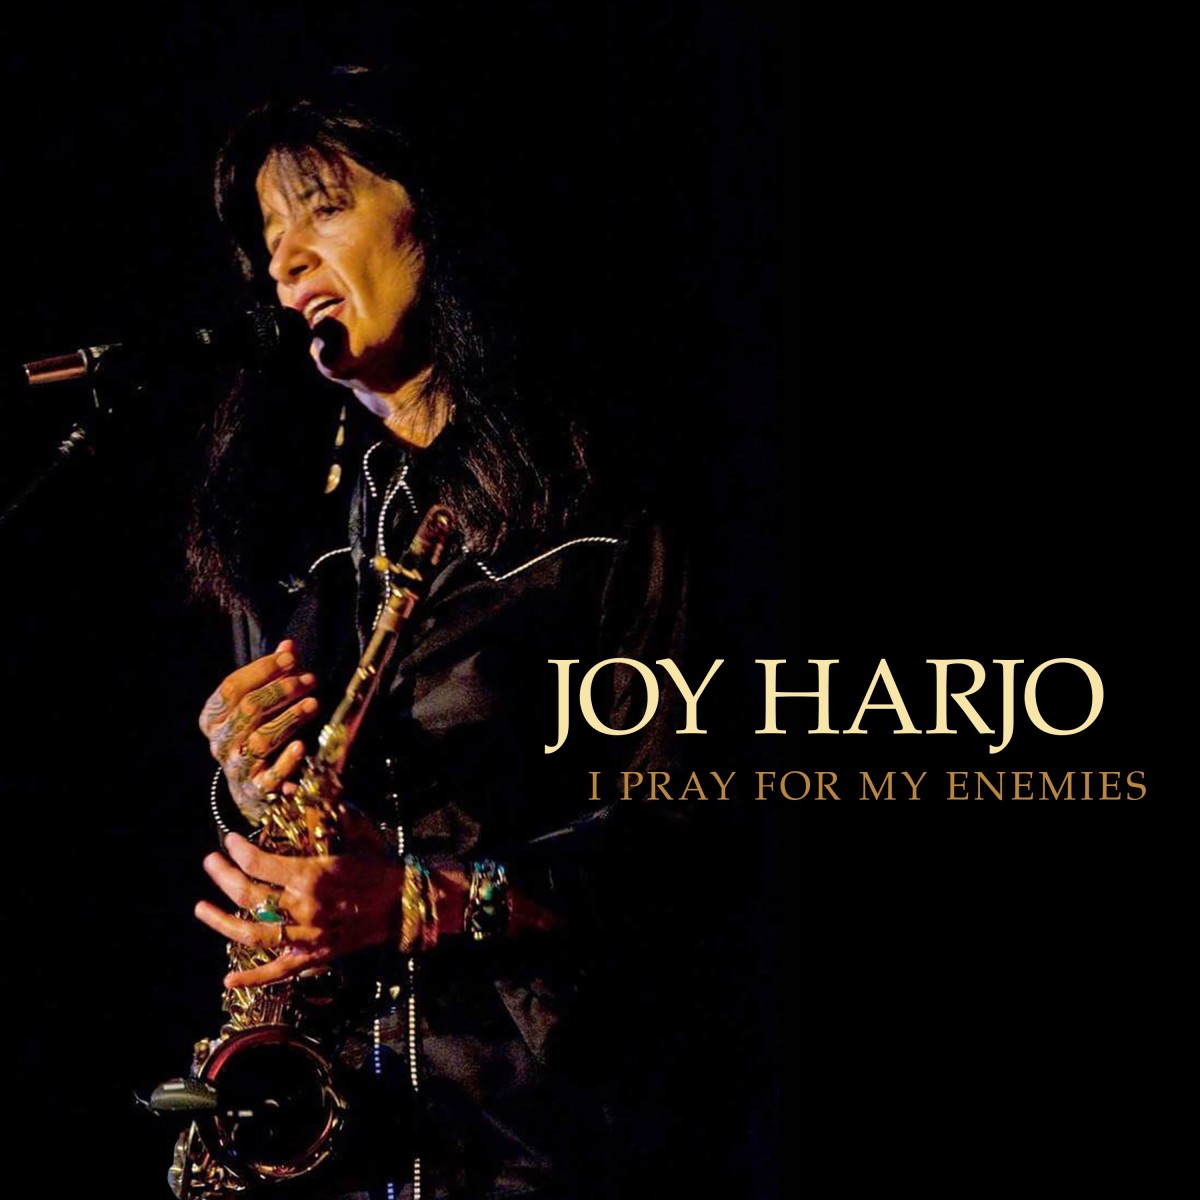 Joy Harjo